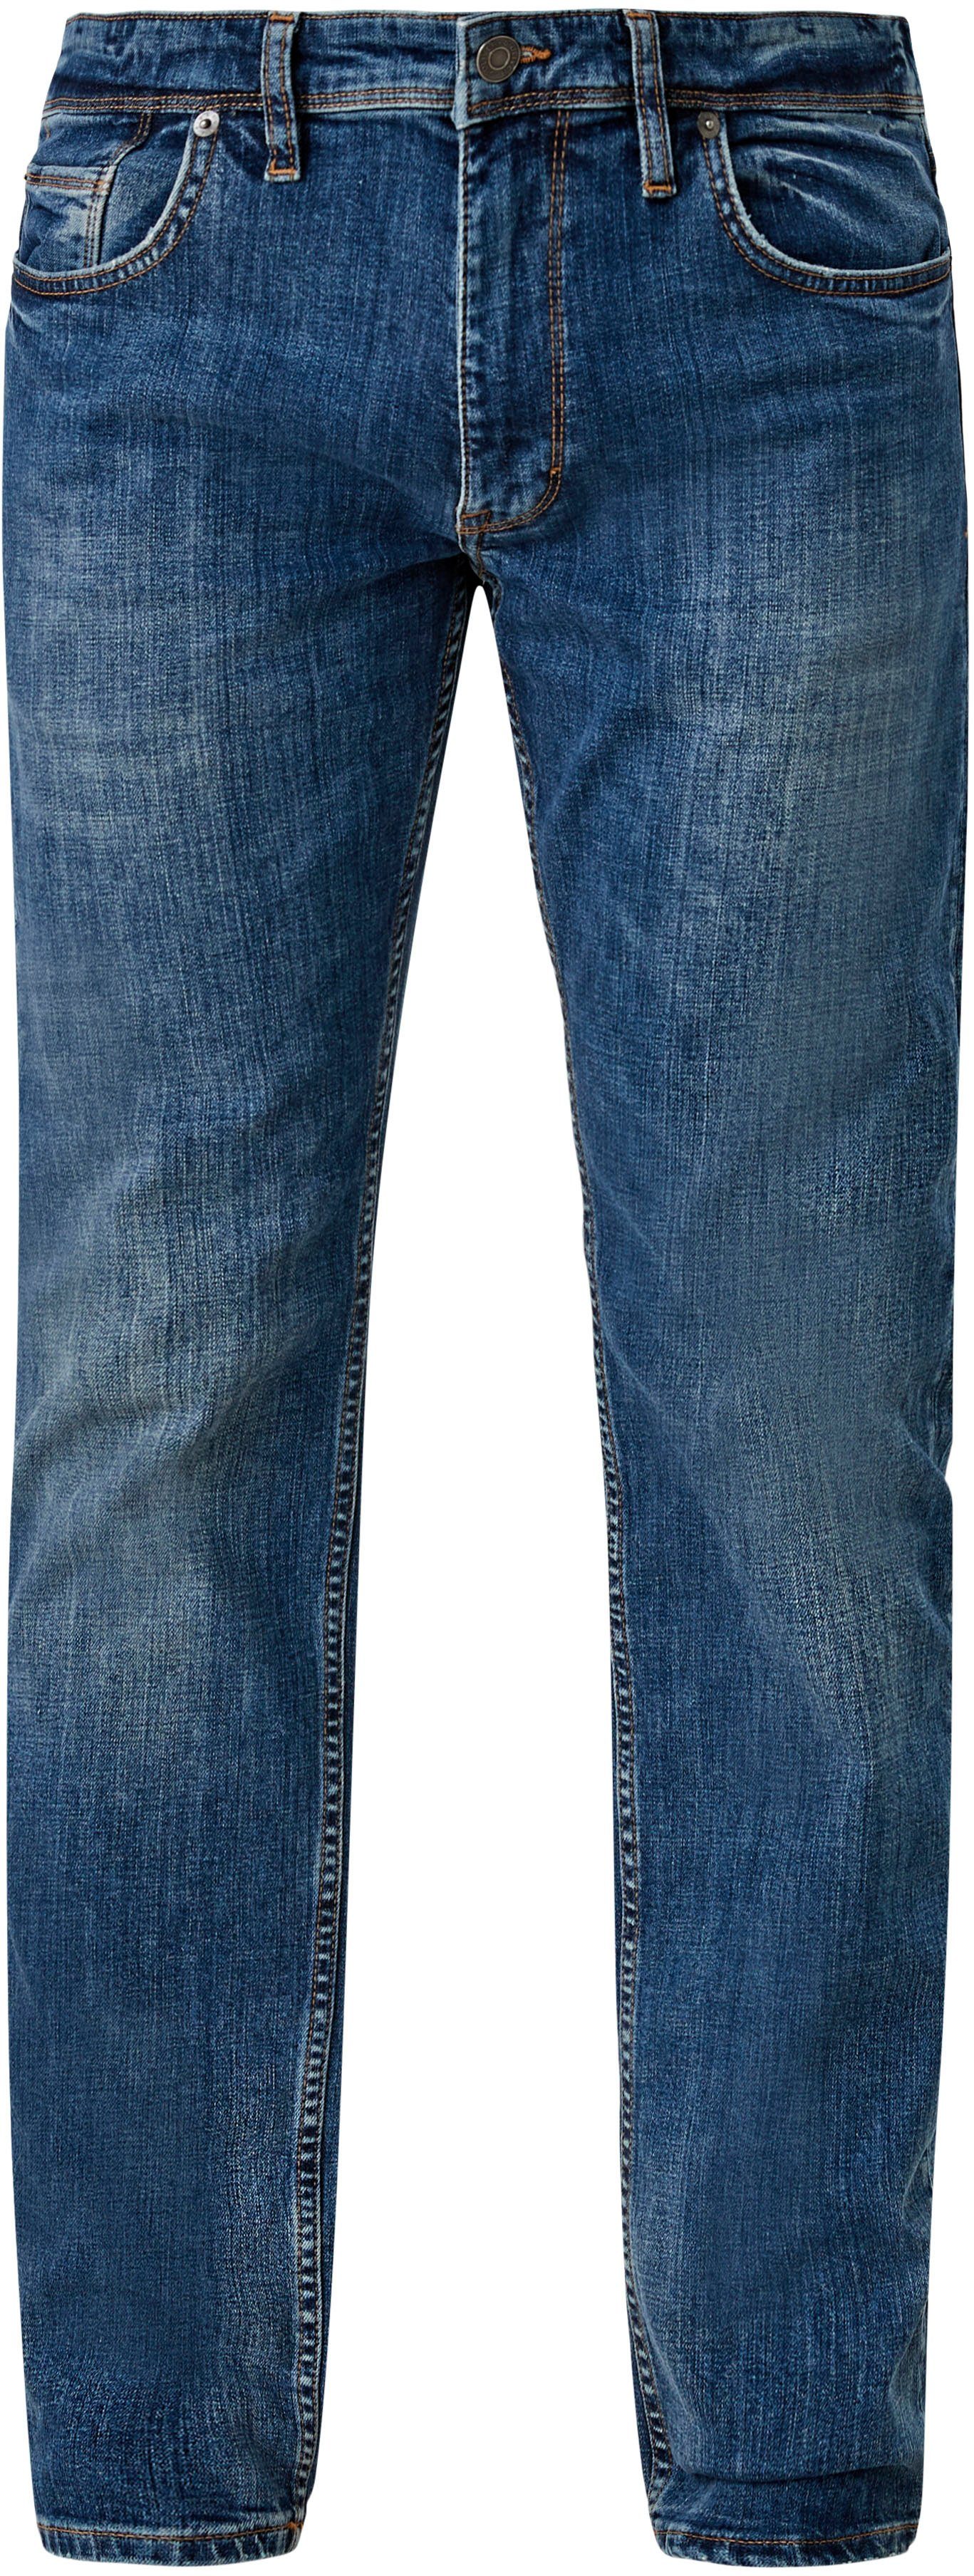 s.Oliver 5-Pocket-Jeans mit authentischer Waschung ozeanblau | Jeans